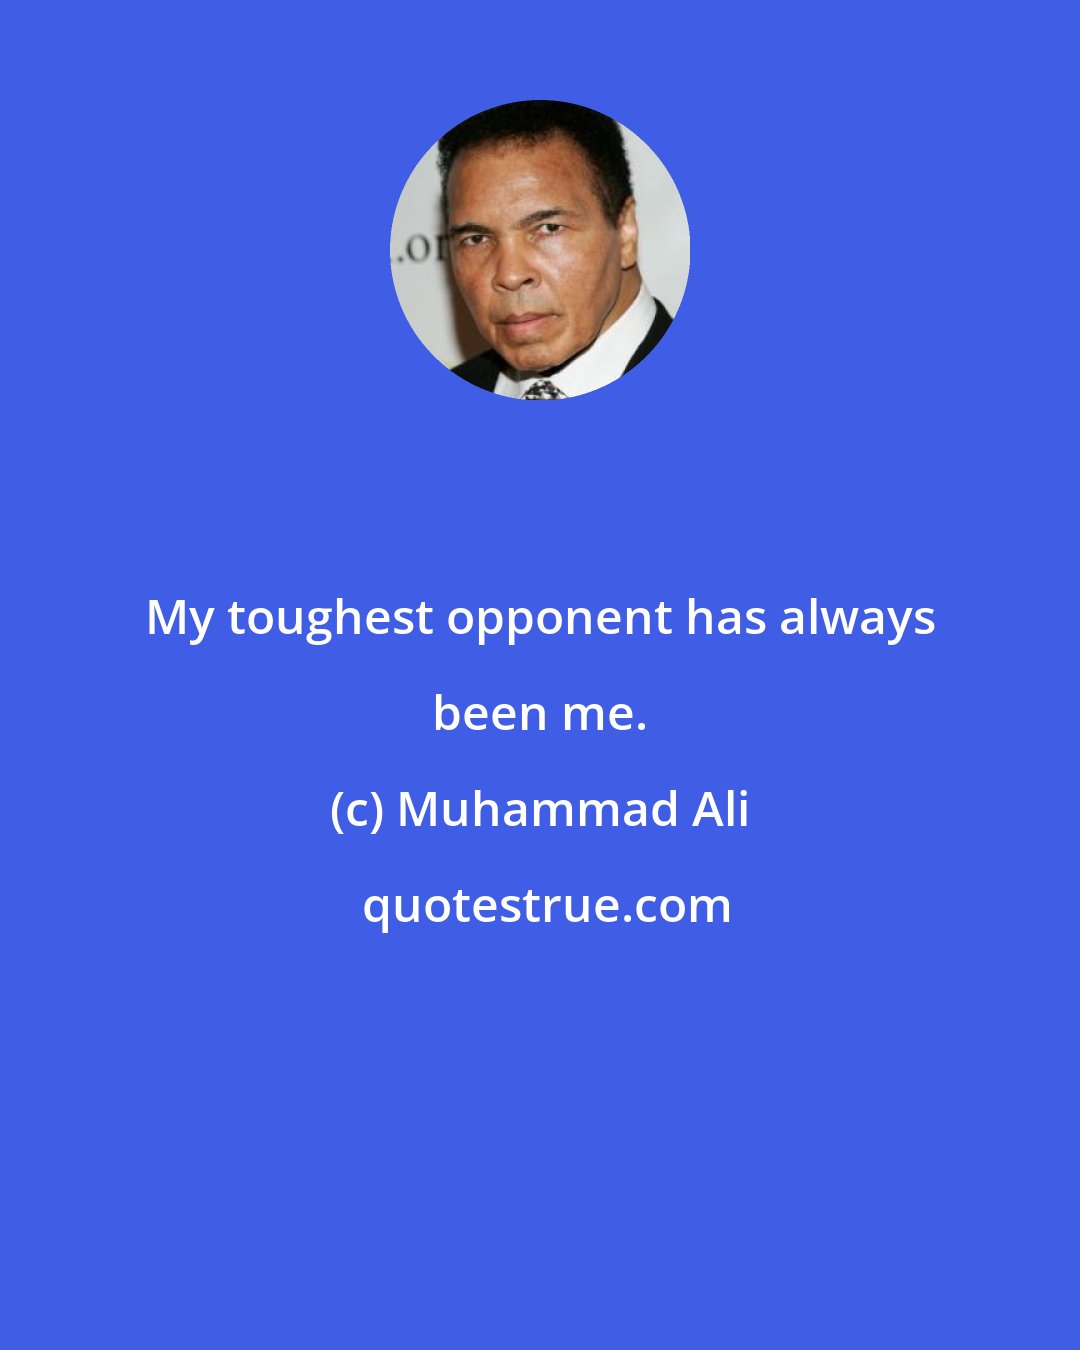 Muhammad Ali: My toughest opponent has always been me.